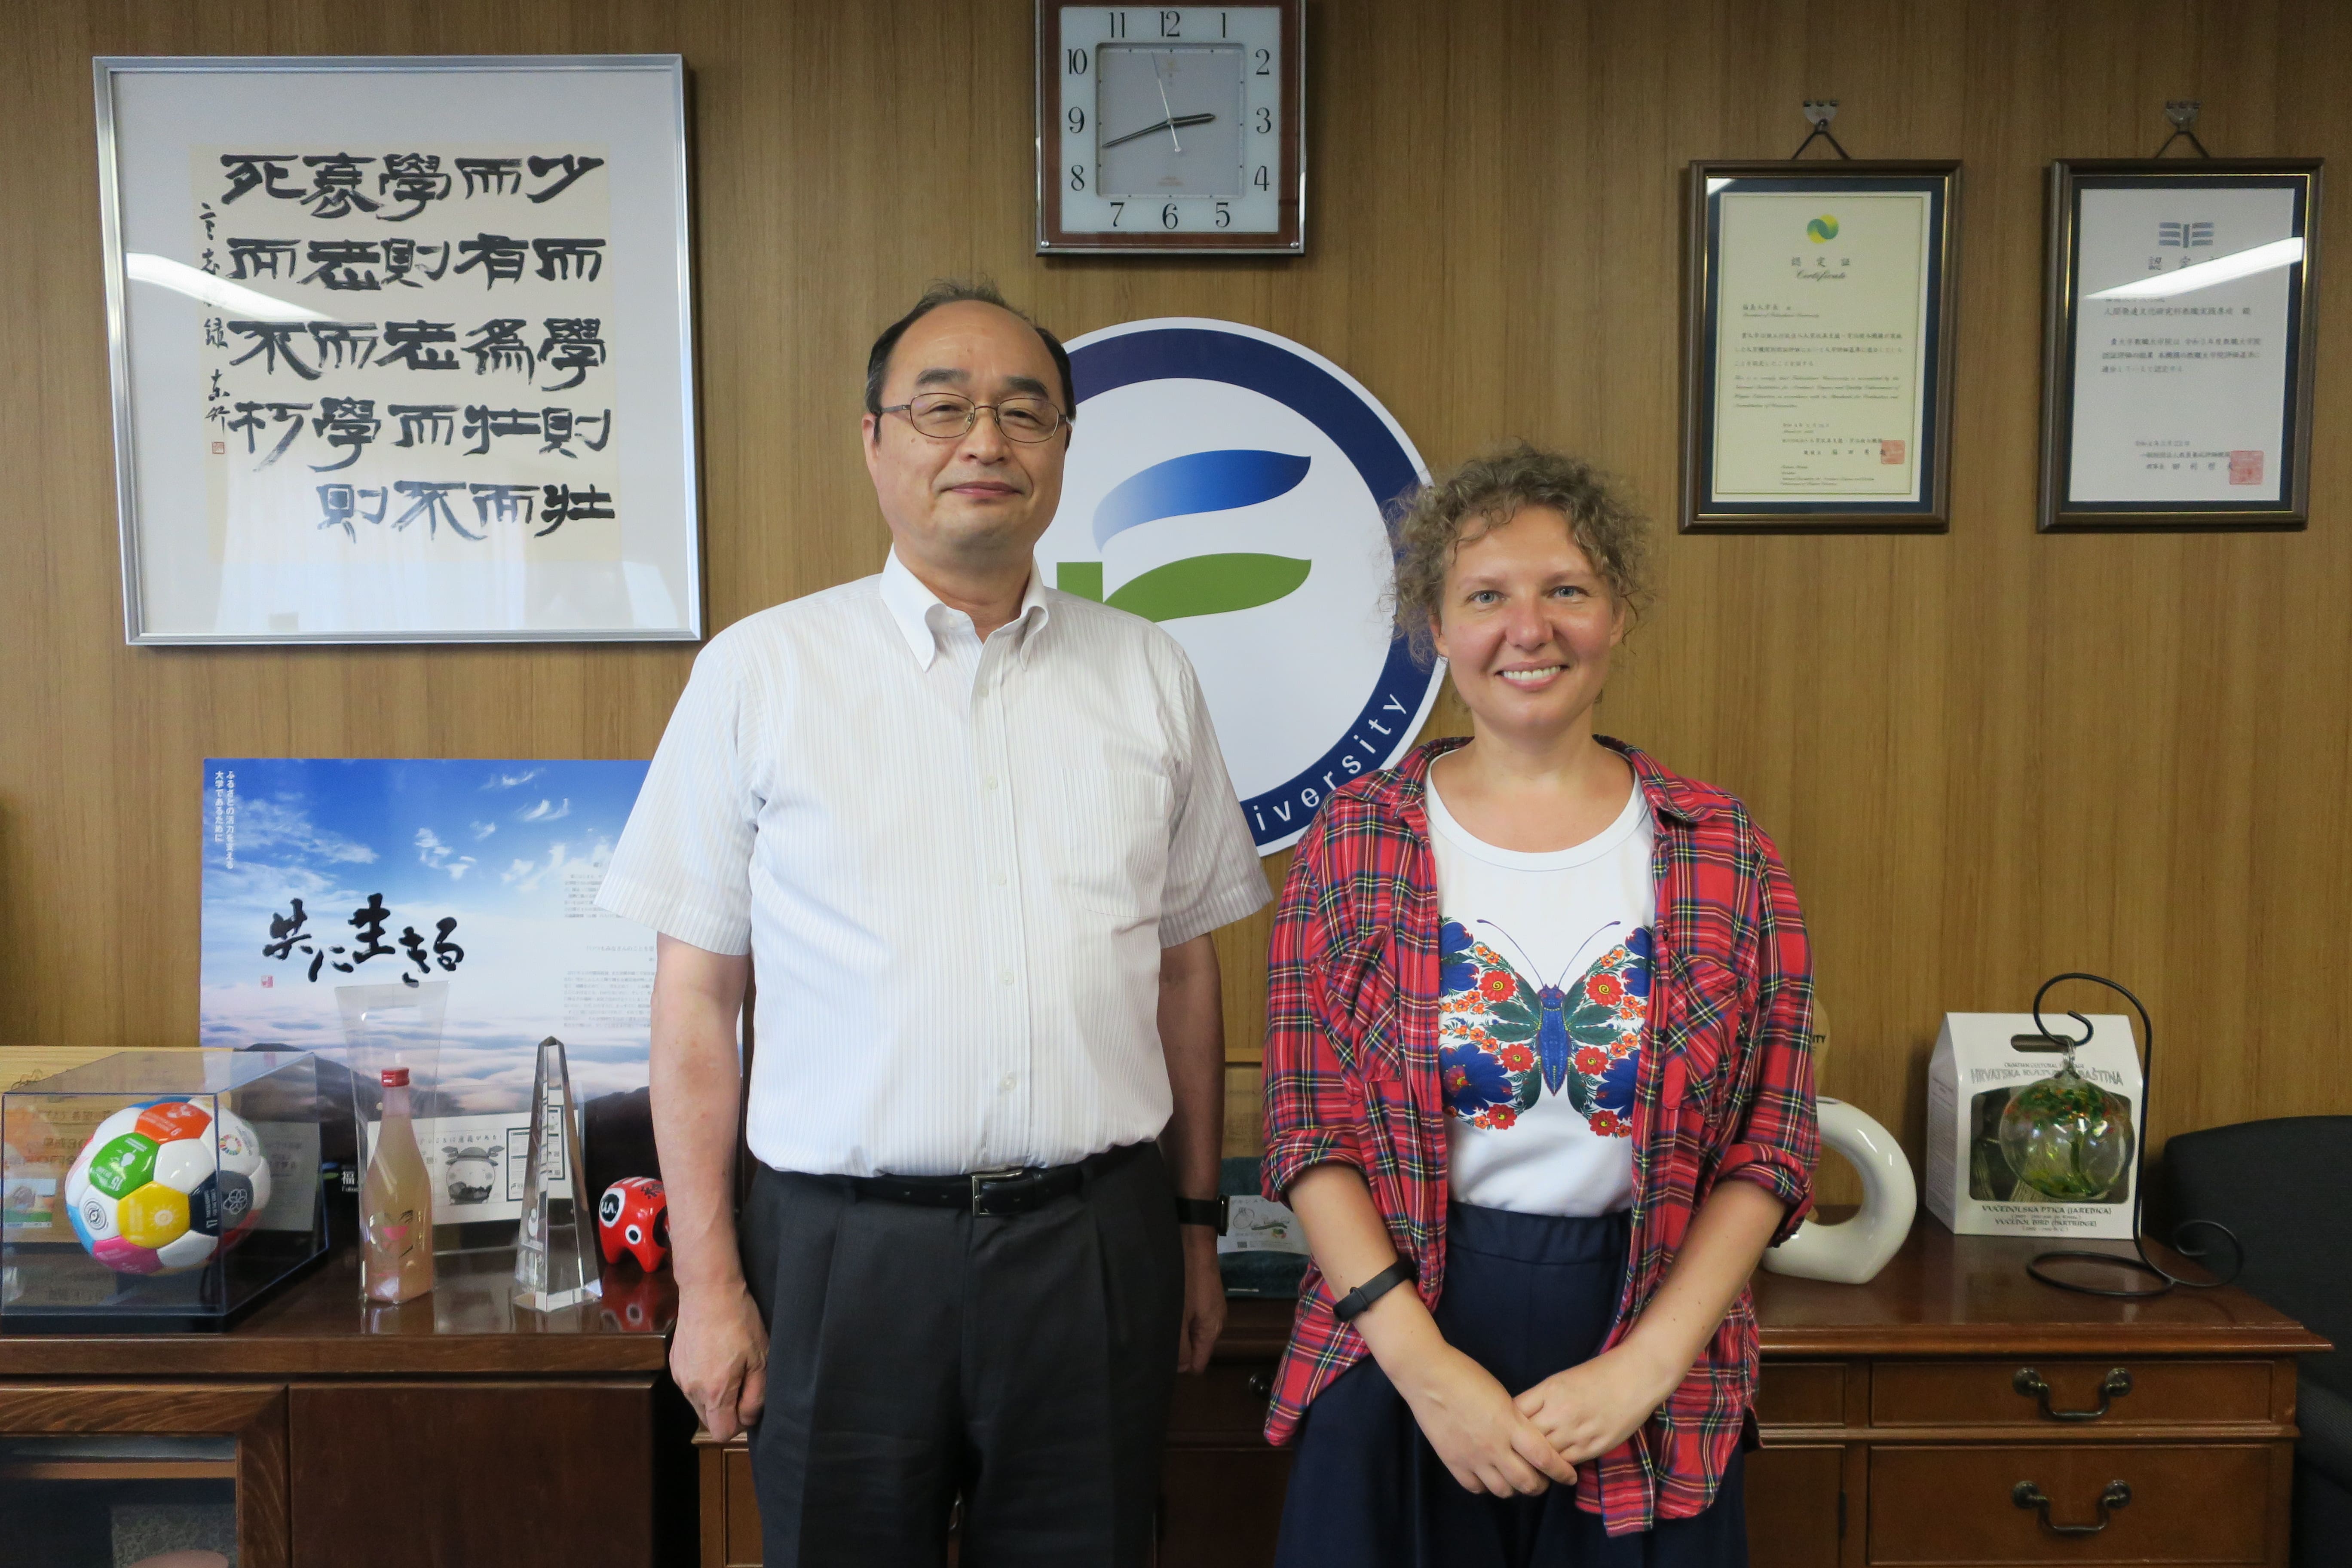 Dr. Burdo paid a courtesy visit to Professor Miura, the president of Fukushima University